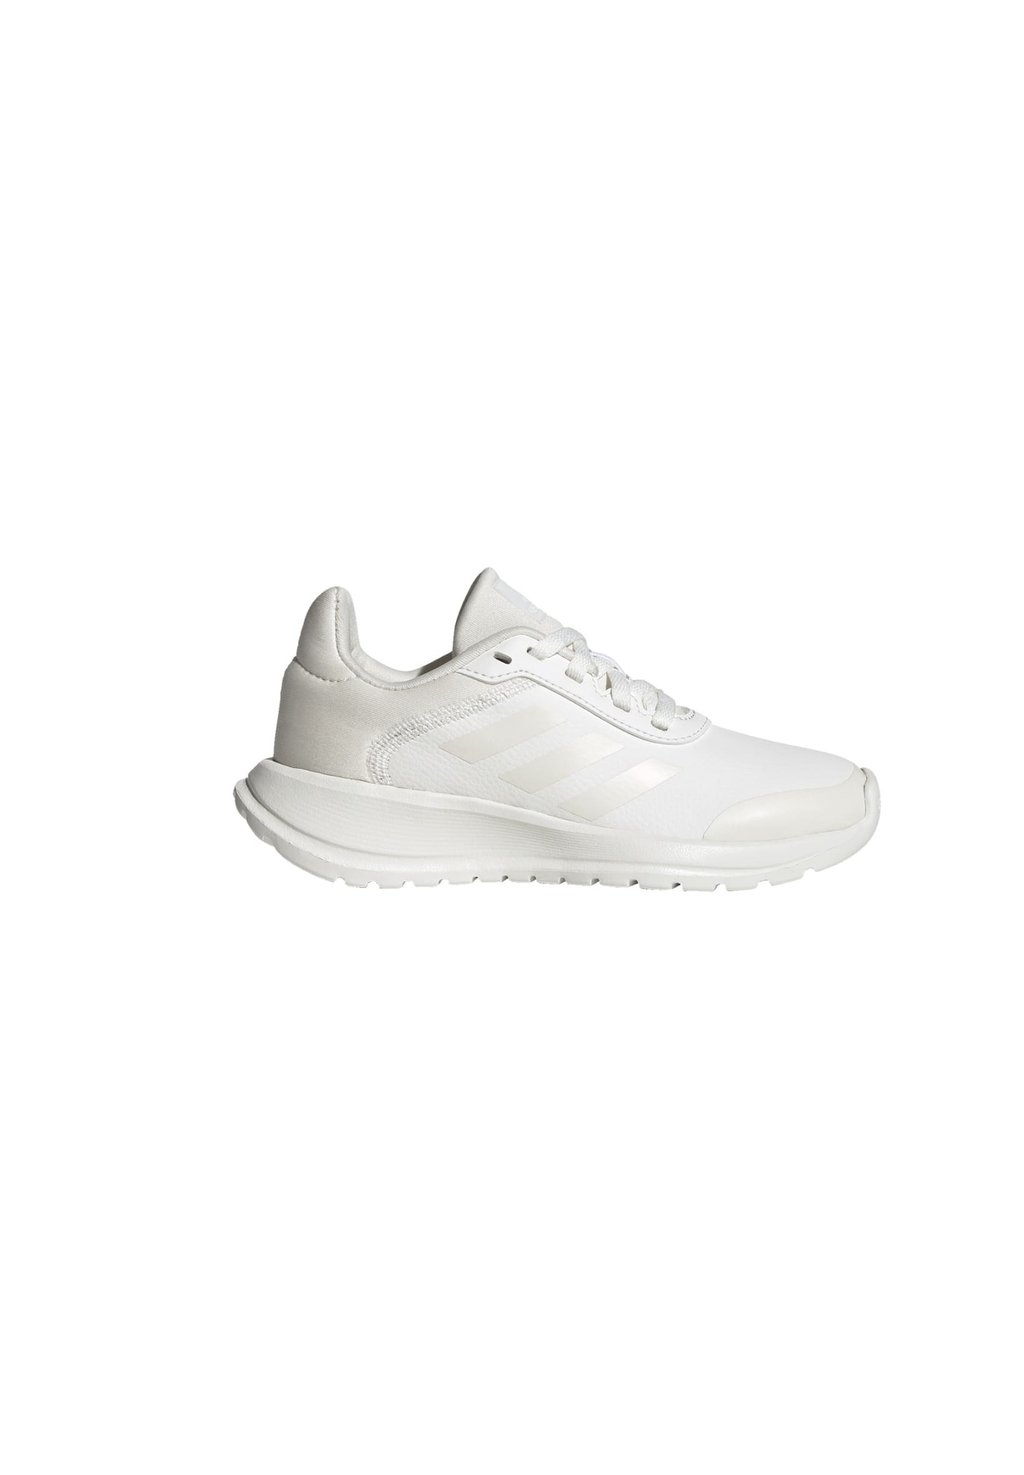 Нейтральные кроссовки Tensaur Run Adidas, цвет core white